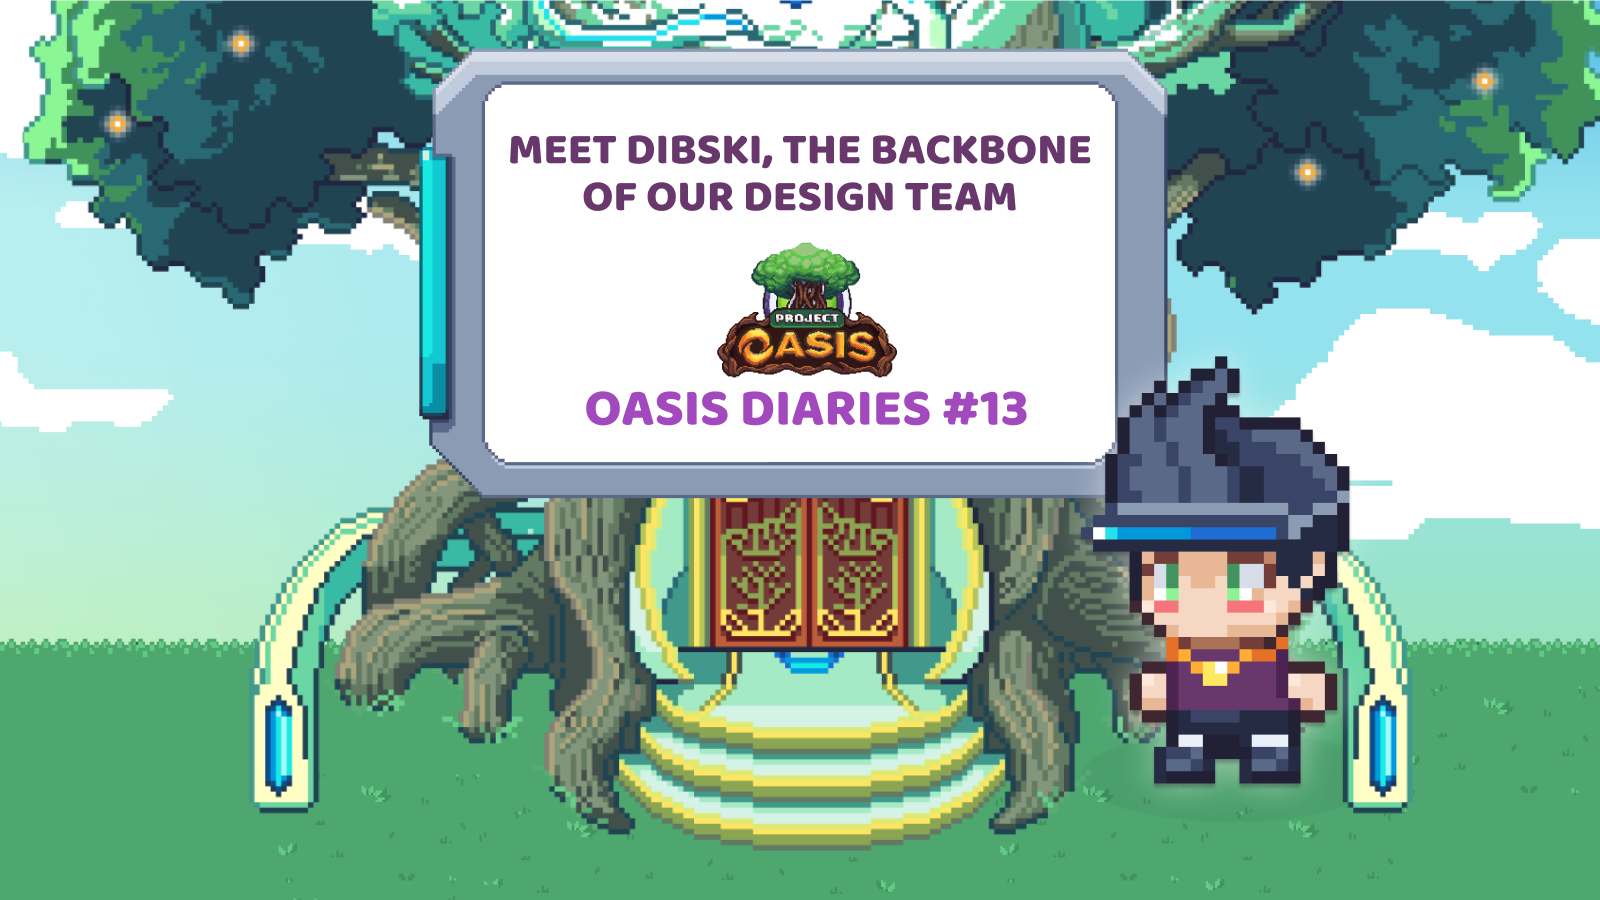 OASIS Diaries #13: Meet Dibski, The Backbone of The ProjectOasis Design Team